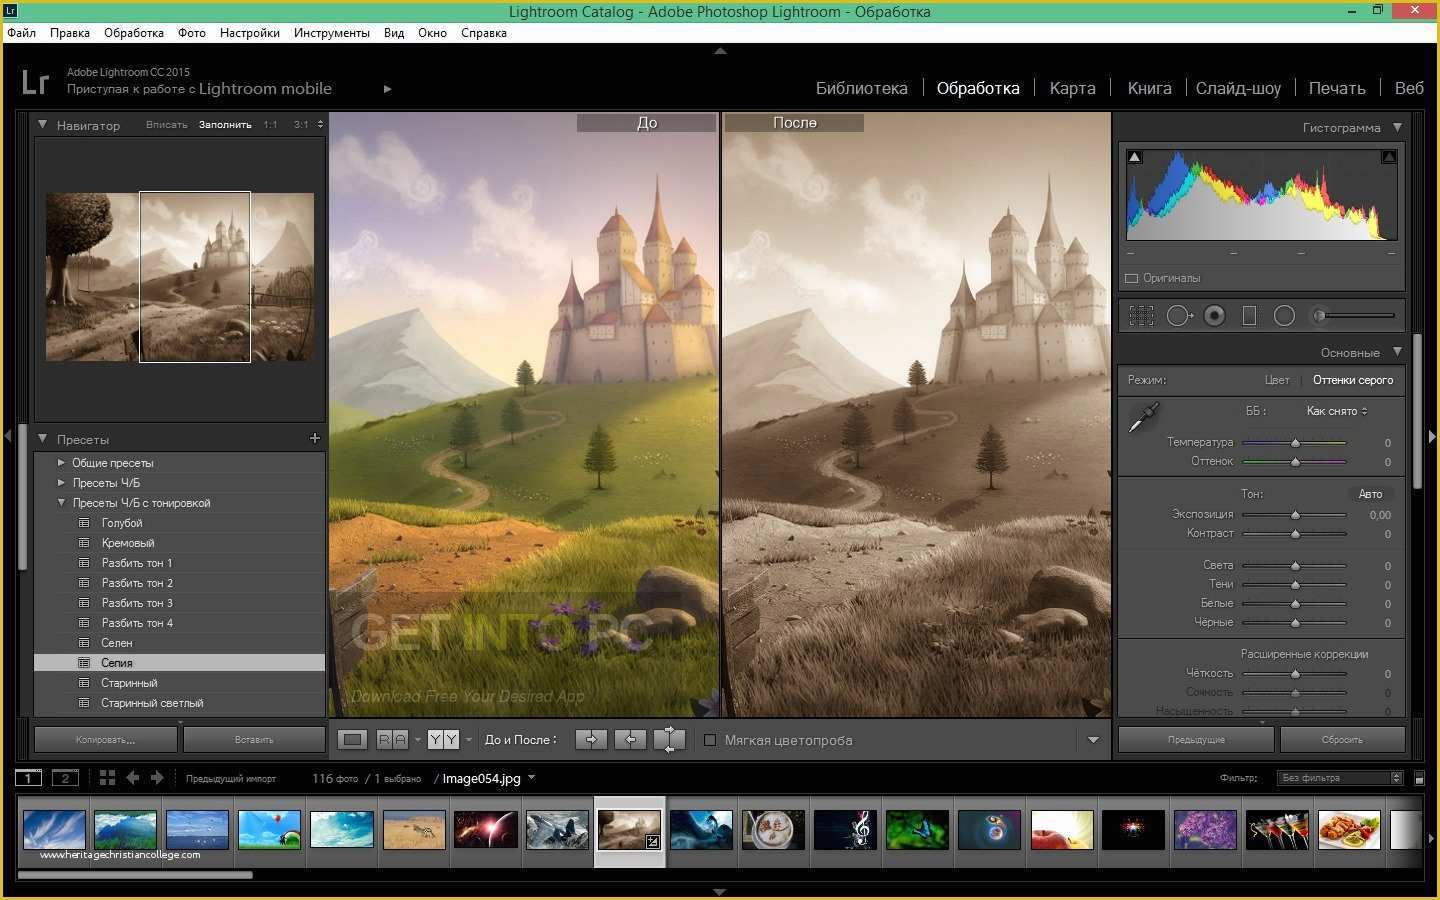 Adobe Photoshop Psd Templates Free Download Of Adobe Shop Lightroom Cc 6 8 Free Download